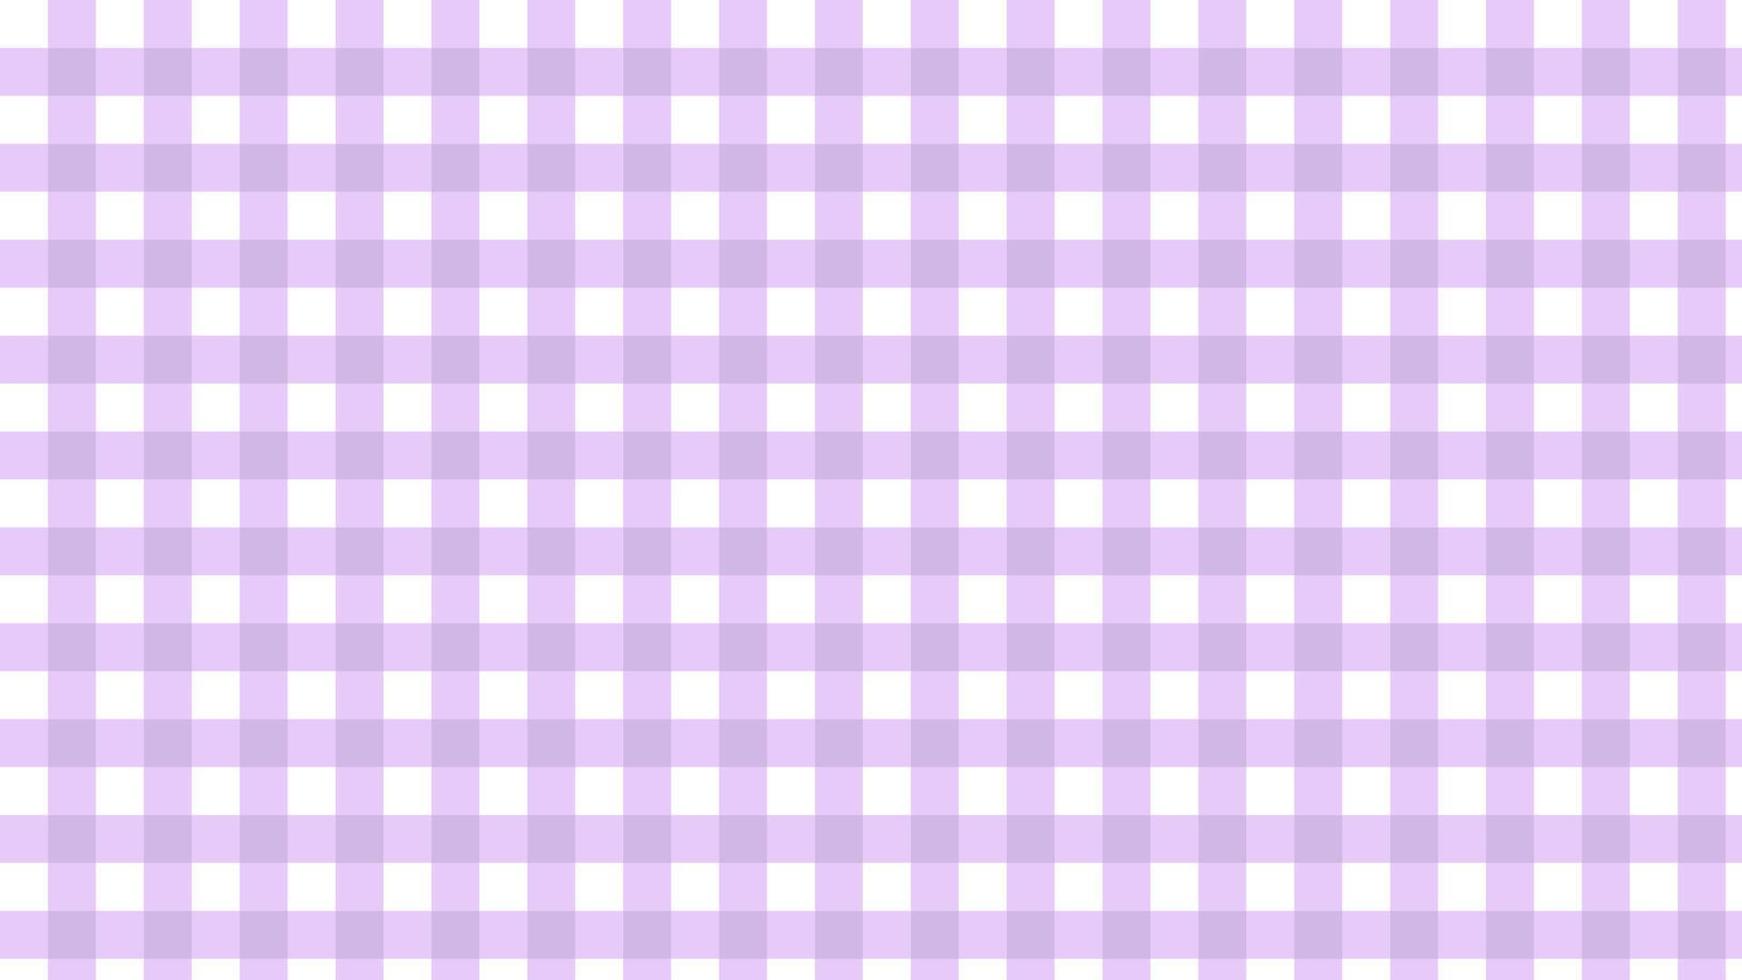 guinga púrpura violeta pastel lindo, tablero de ajedrez, cuadros, ilustración de fondo de patrón de tartán, perfecto para papel tapiz, telón de fondo, postal, fondo para su diseño vector